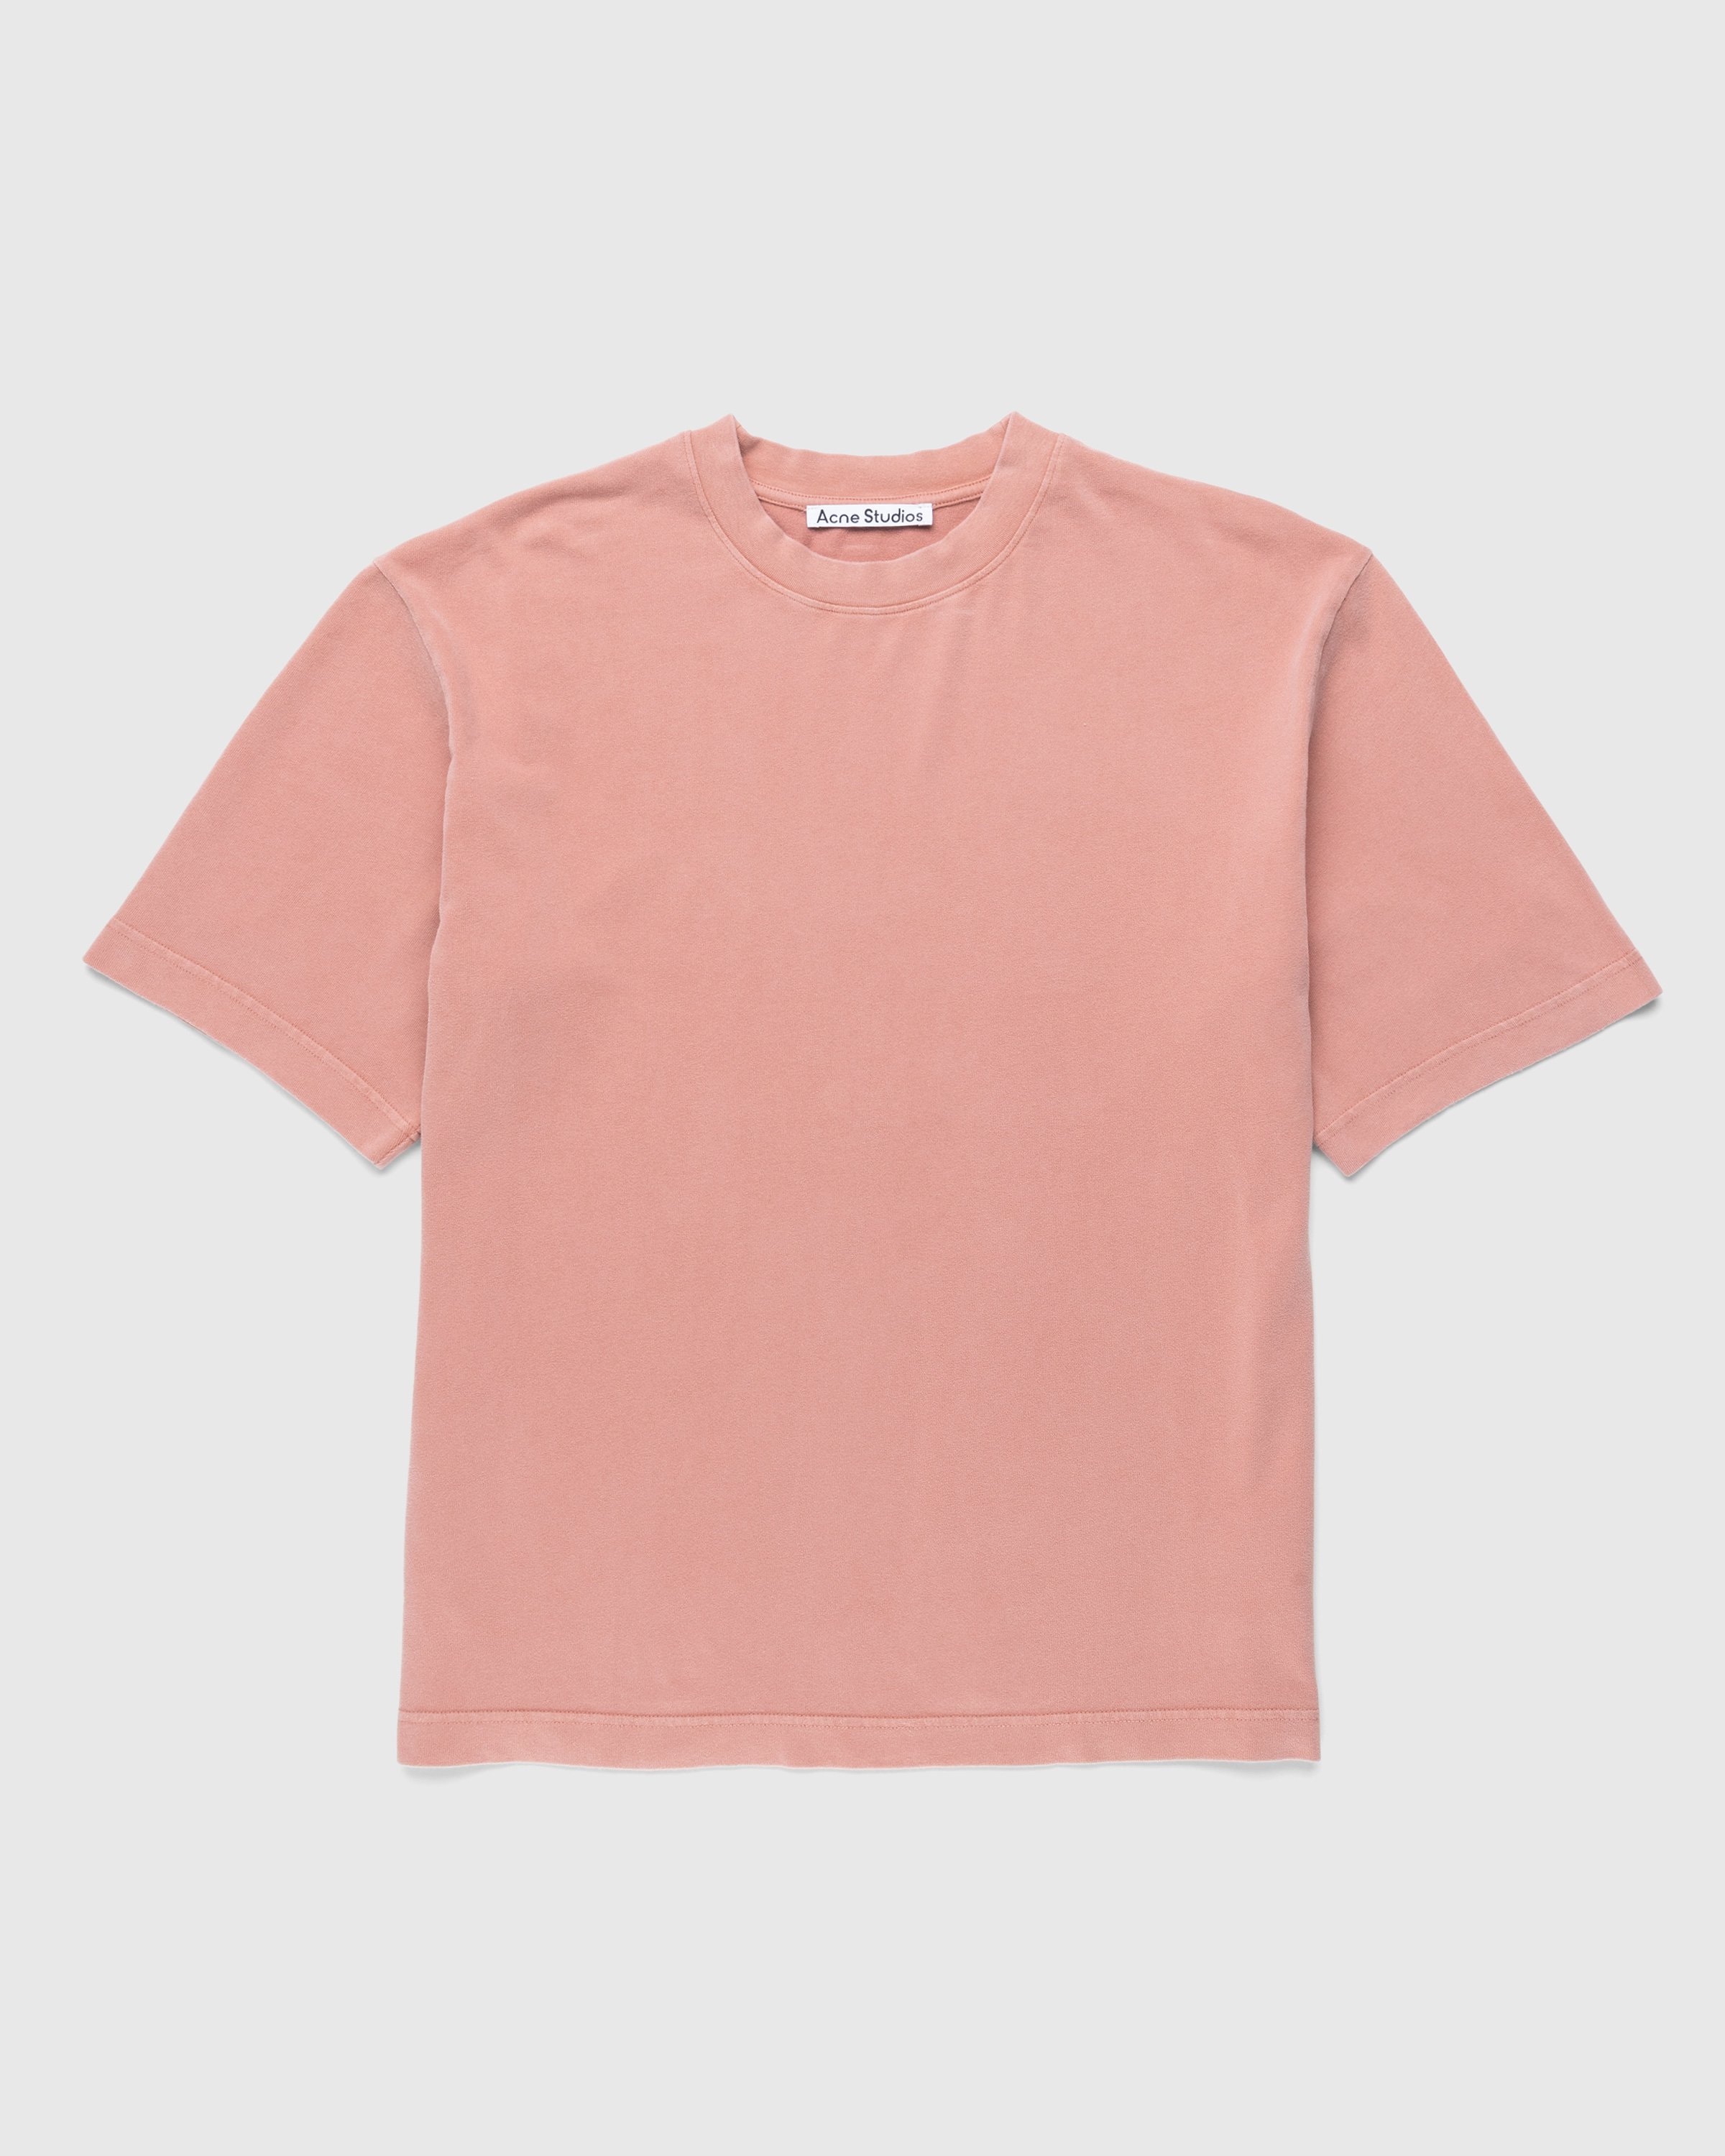 Acne Studios - Garment-Dyed T-Shirt Vintage Pink - Clothing - Pink - Image 1